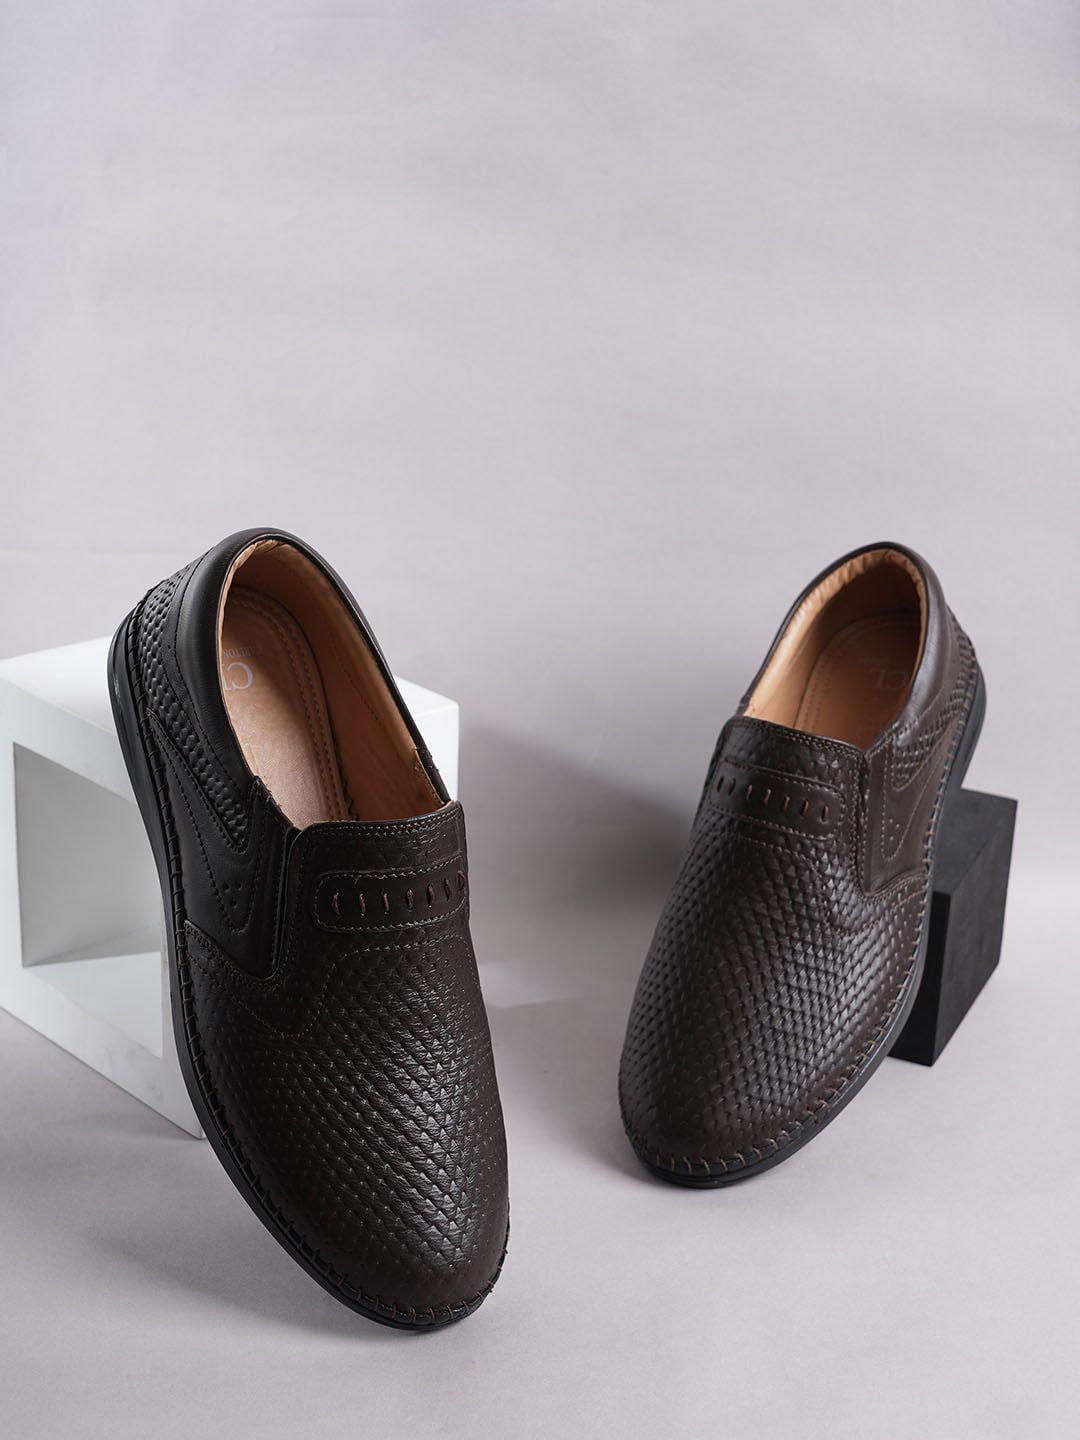 carlton london men textured leather driving shoes